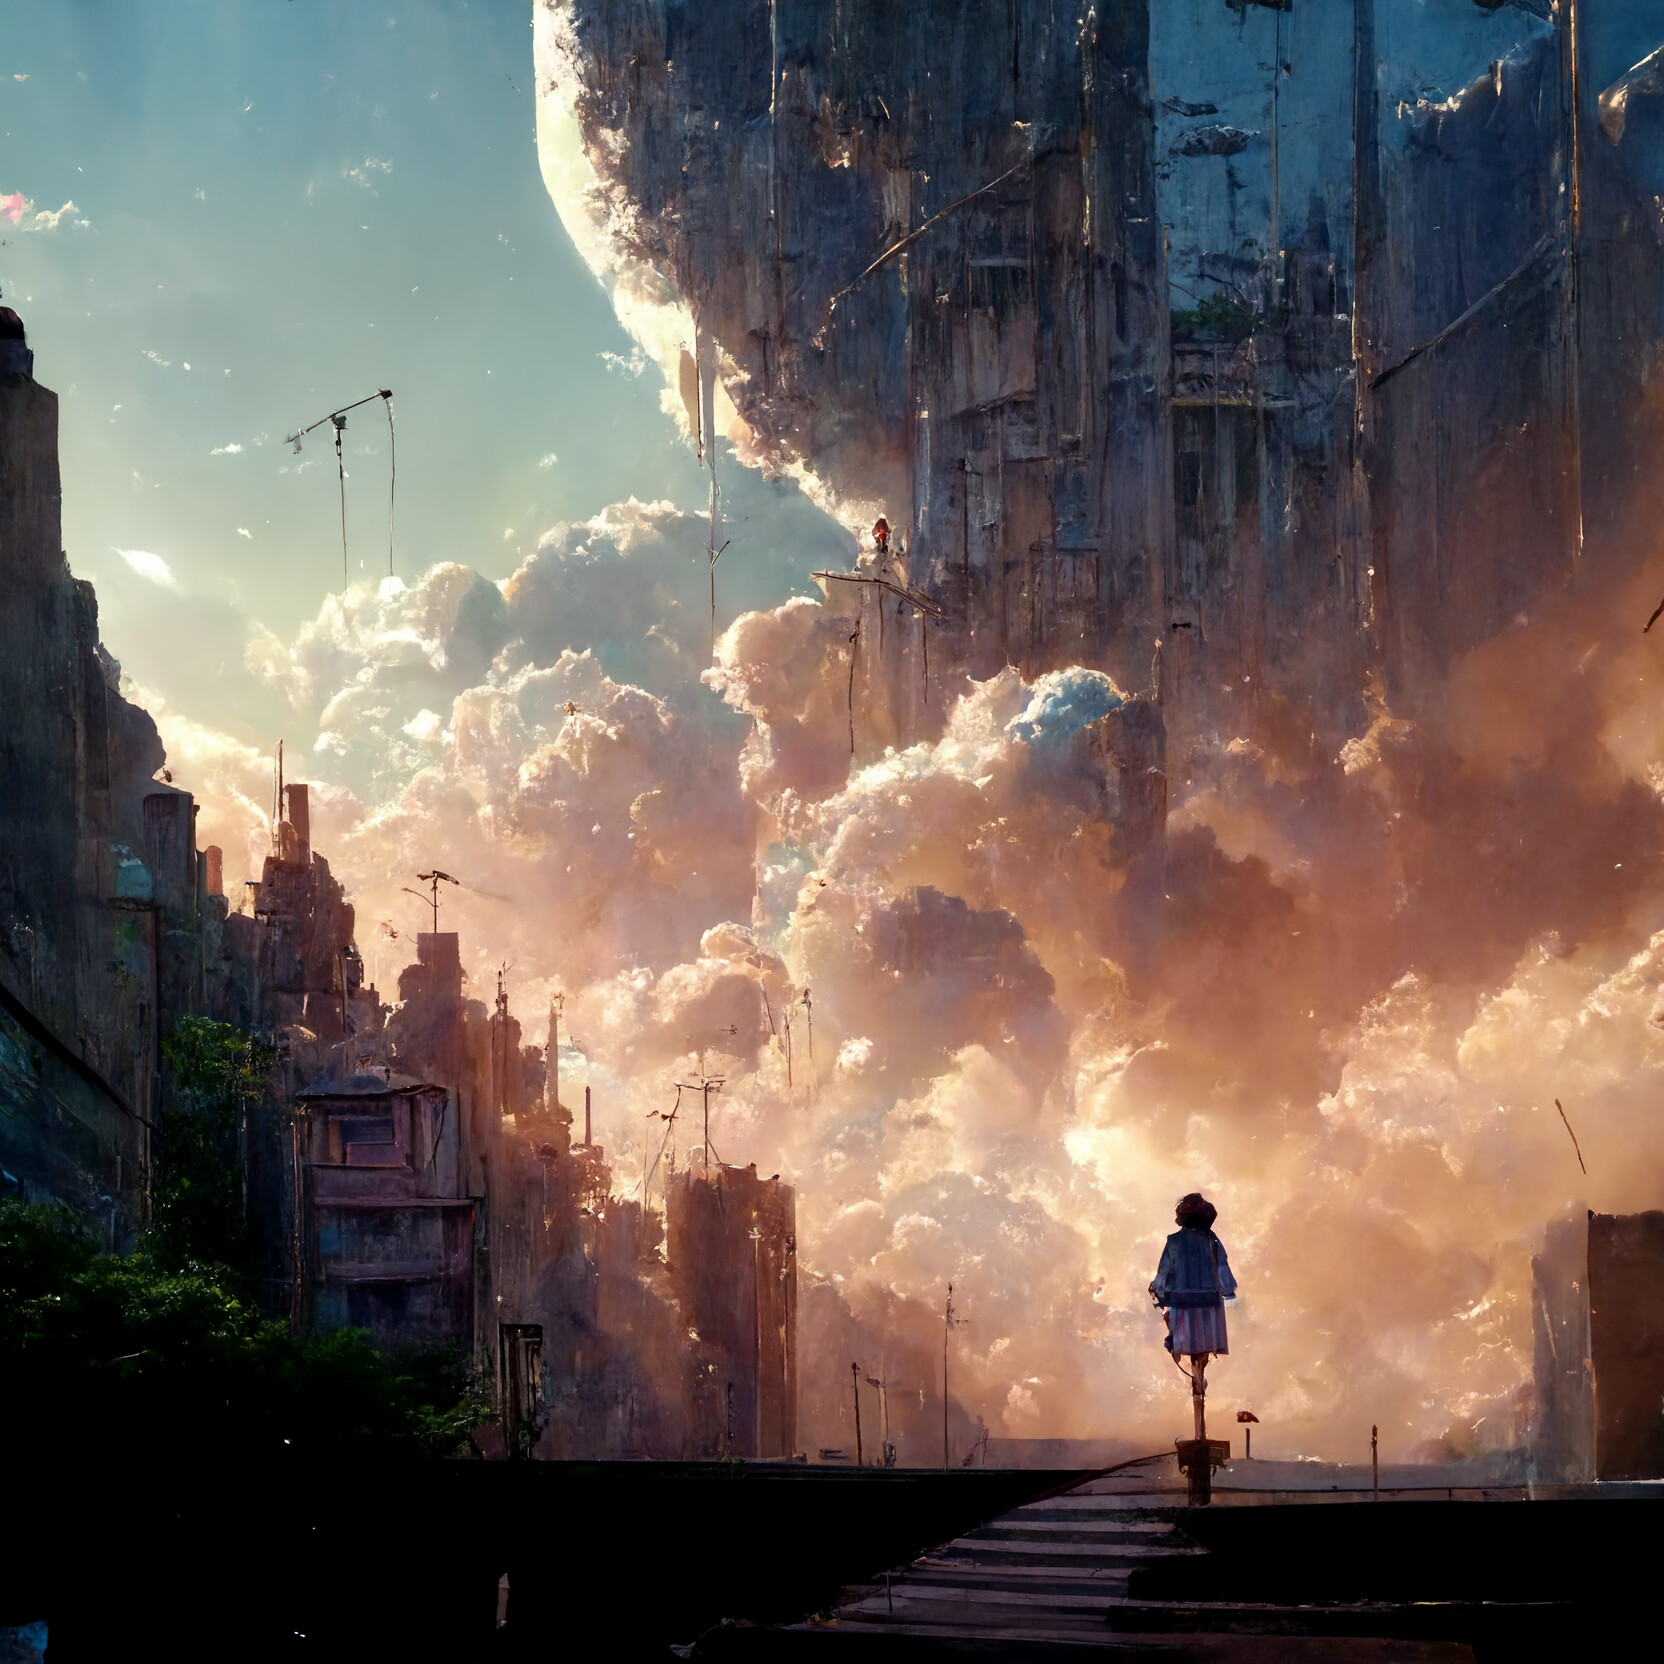 anime futuristic city